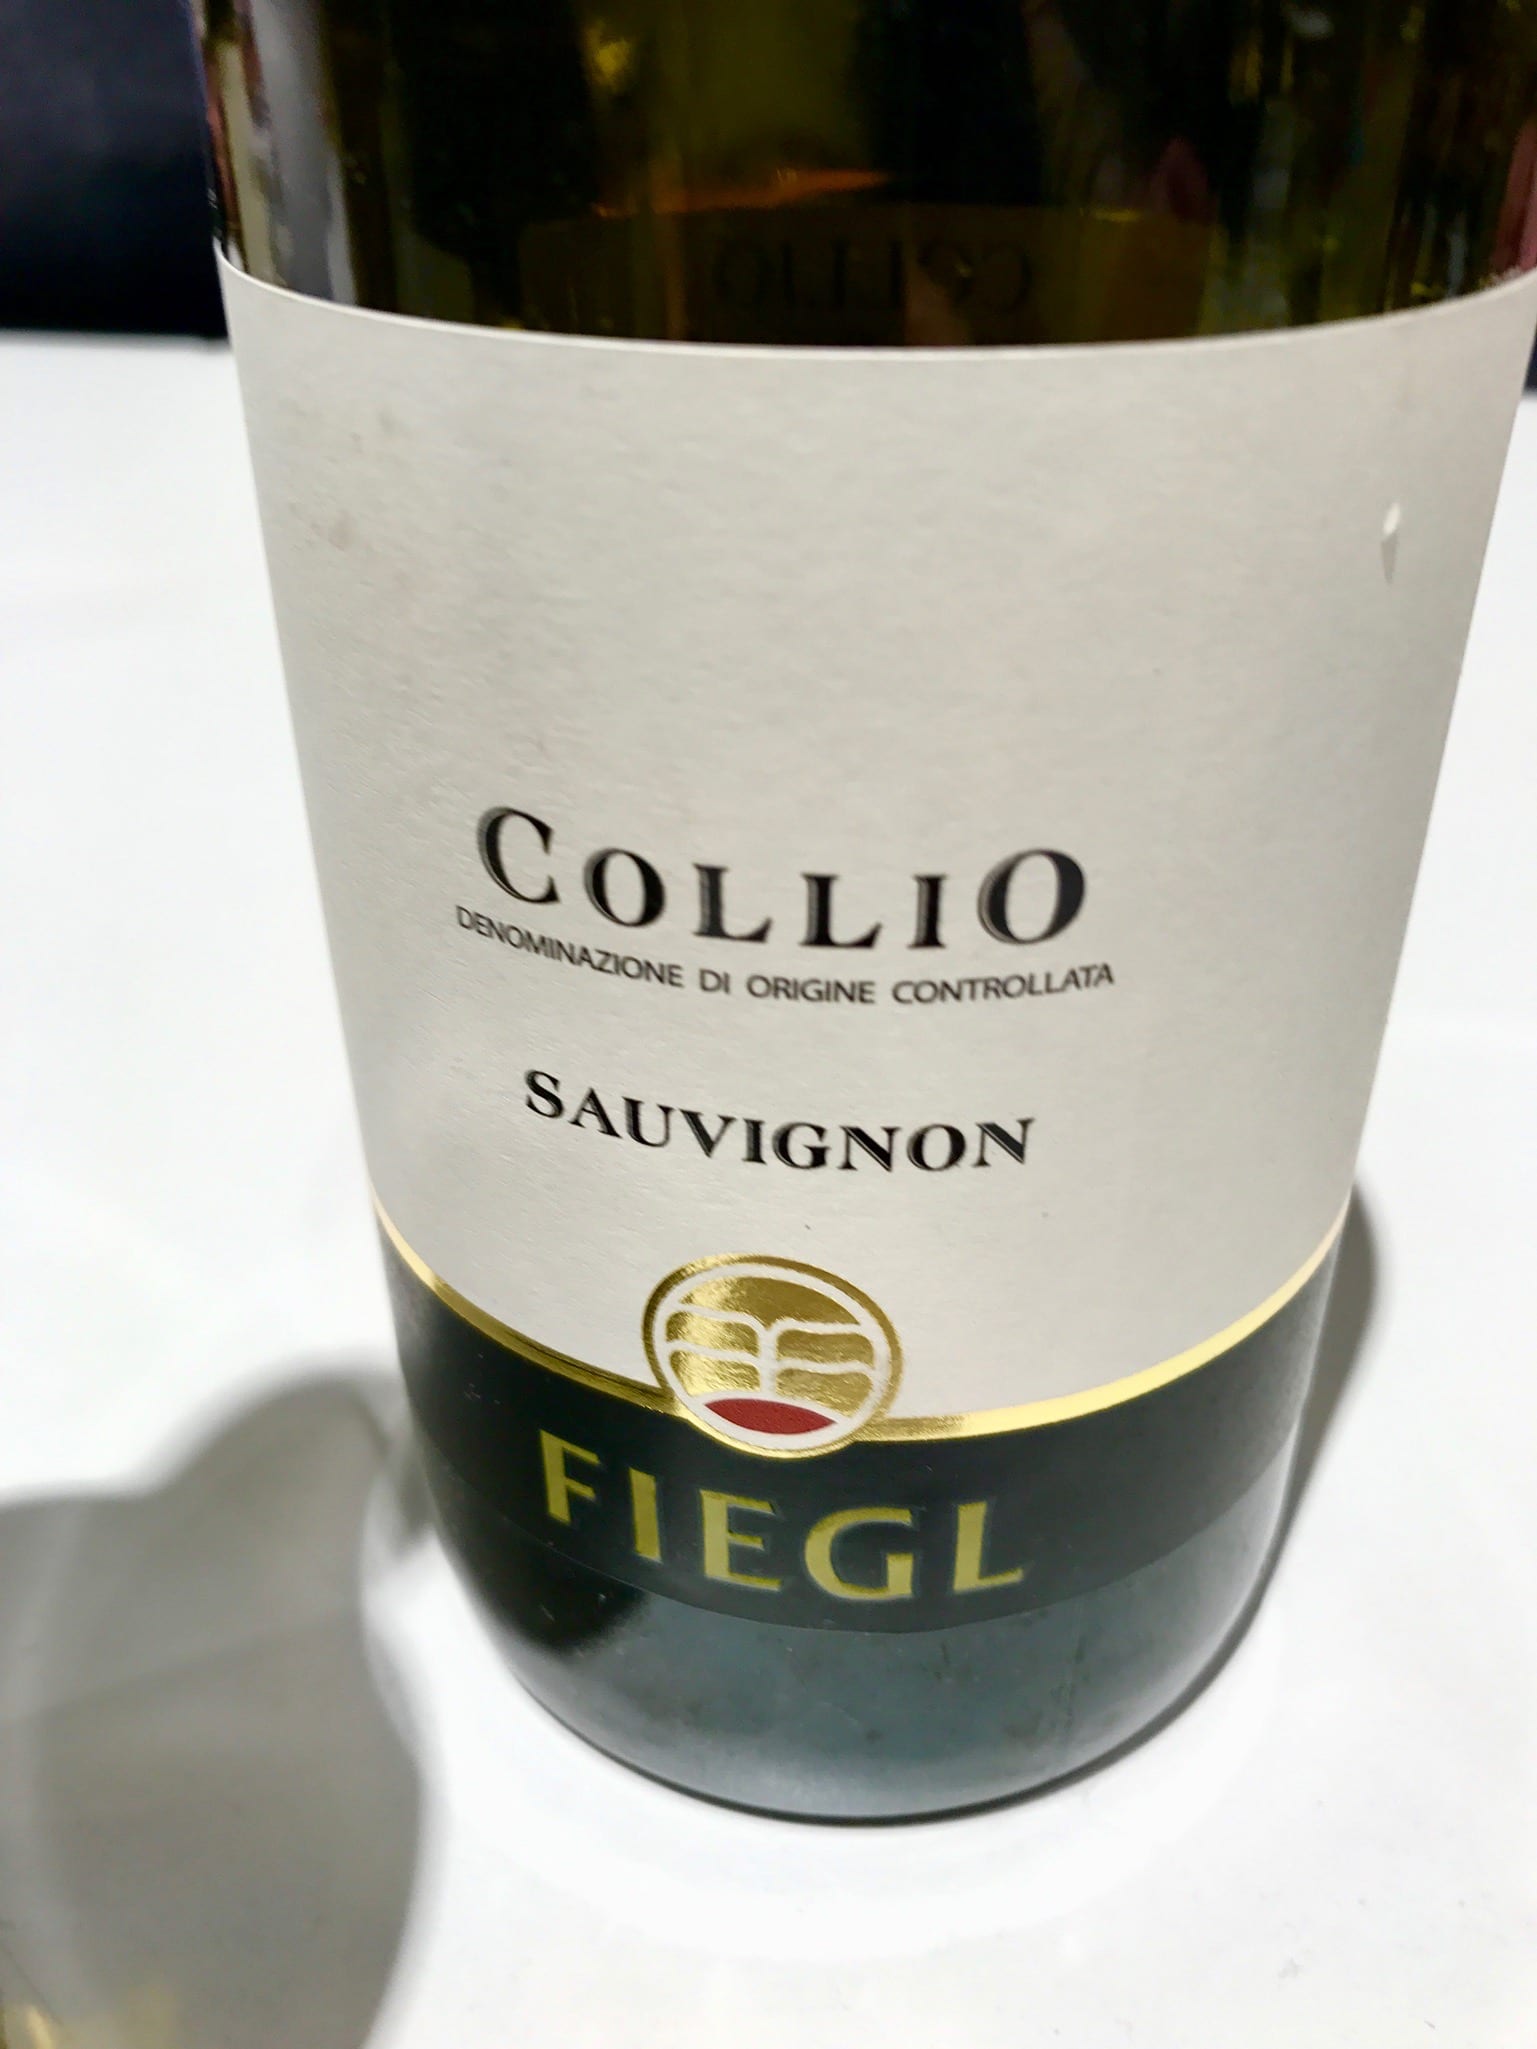 Fiegl Sauvignon 2015 a Vinoè 2016